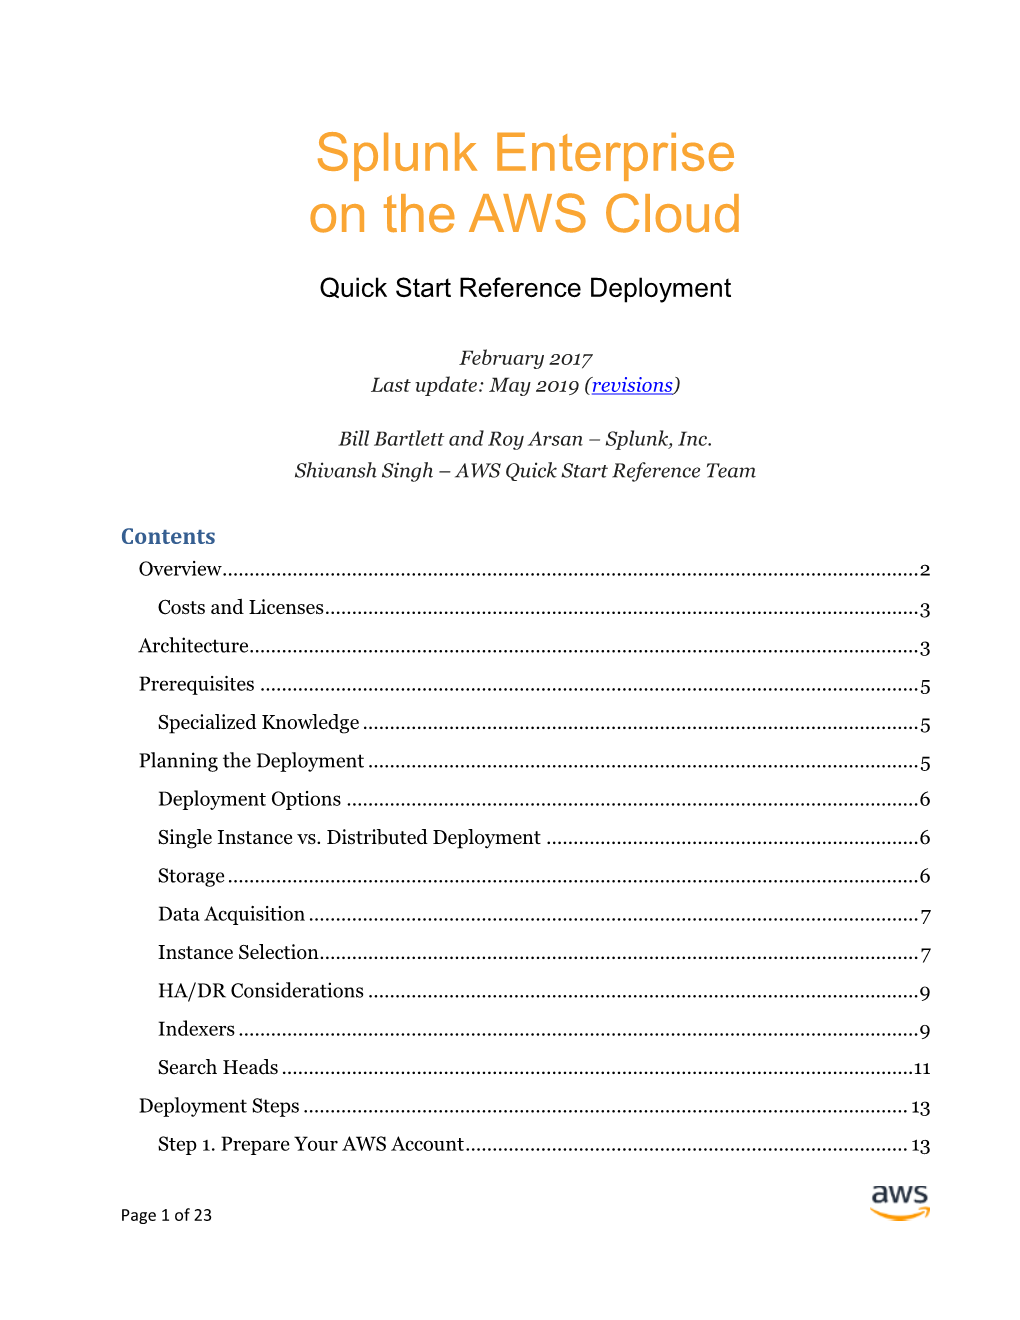 Splunk Enterprise on the AWS Cloud